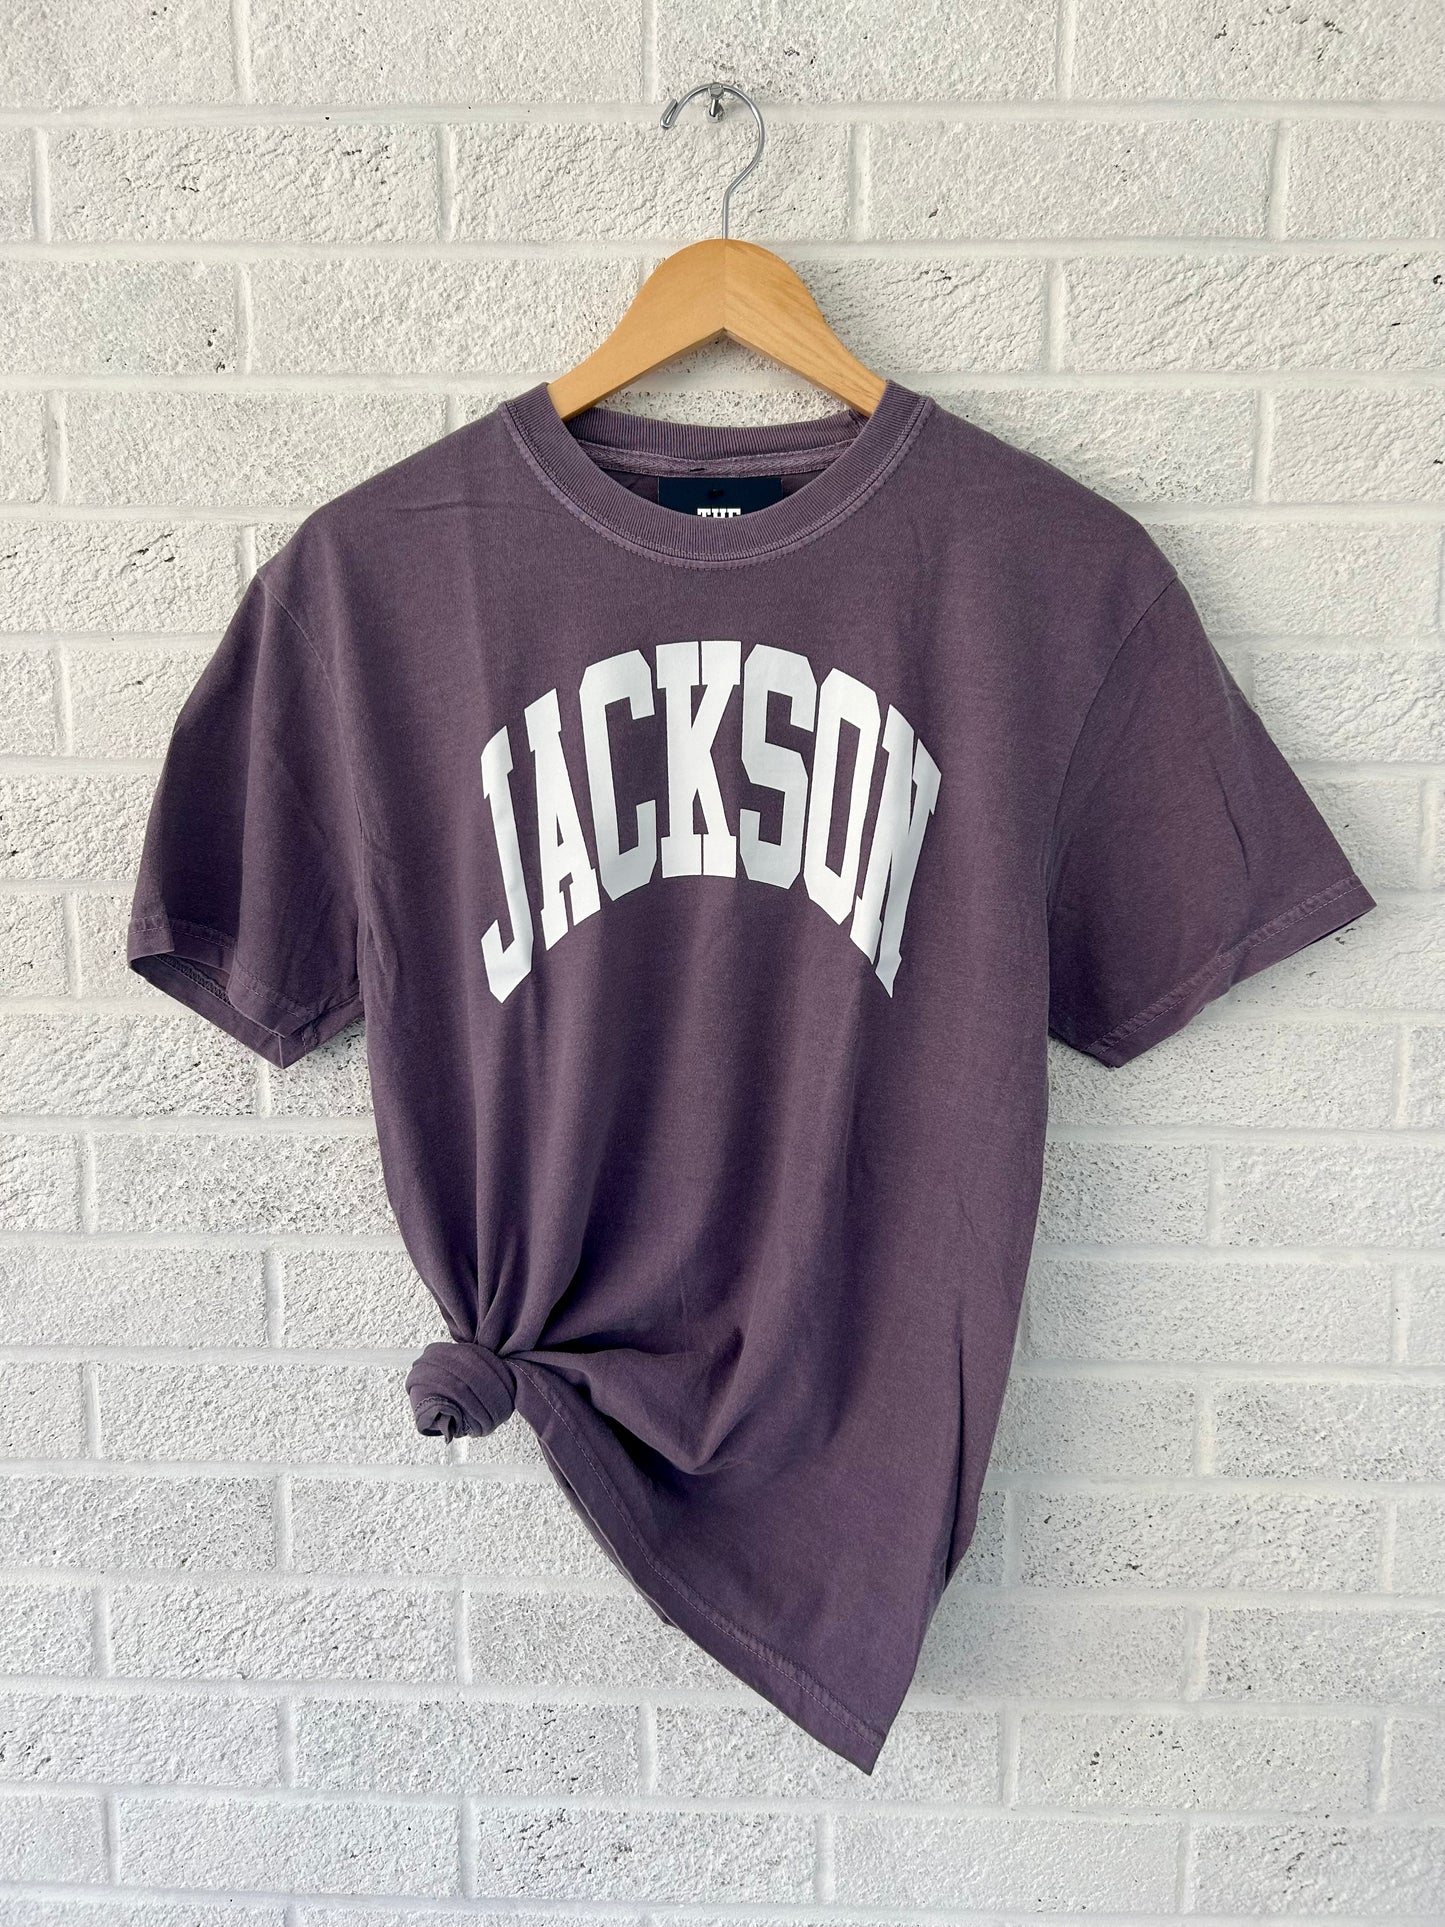 Jackson Vintage T-shirt